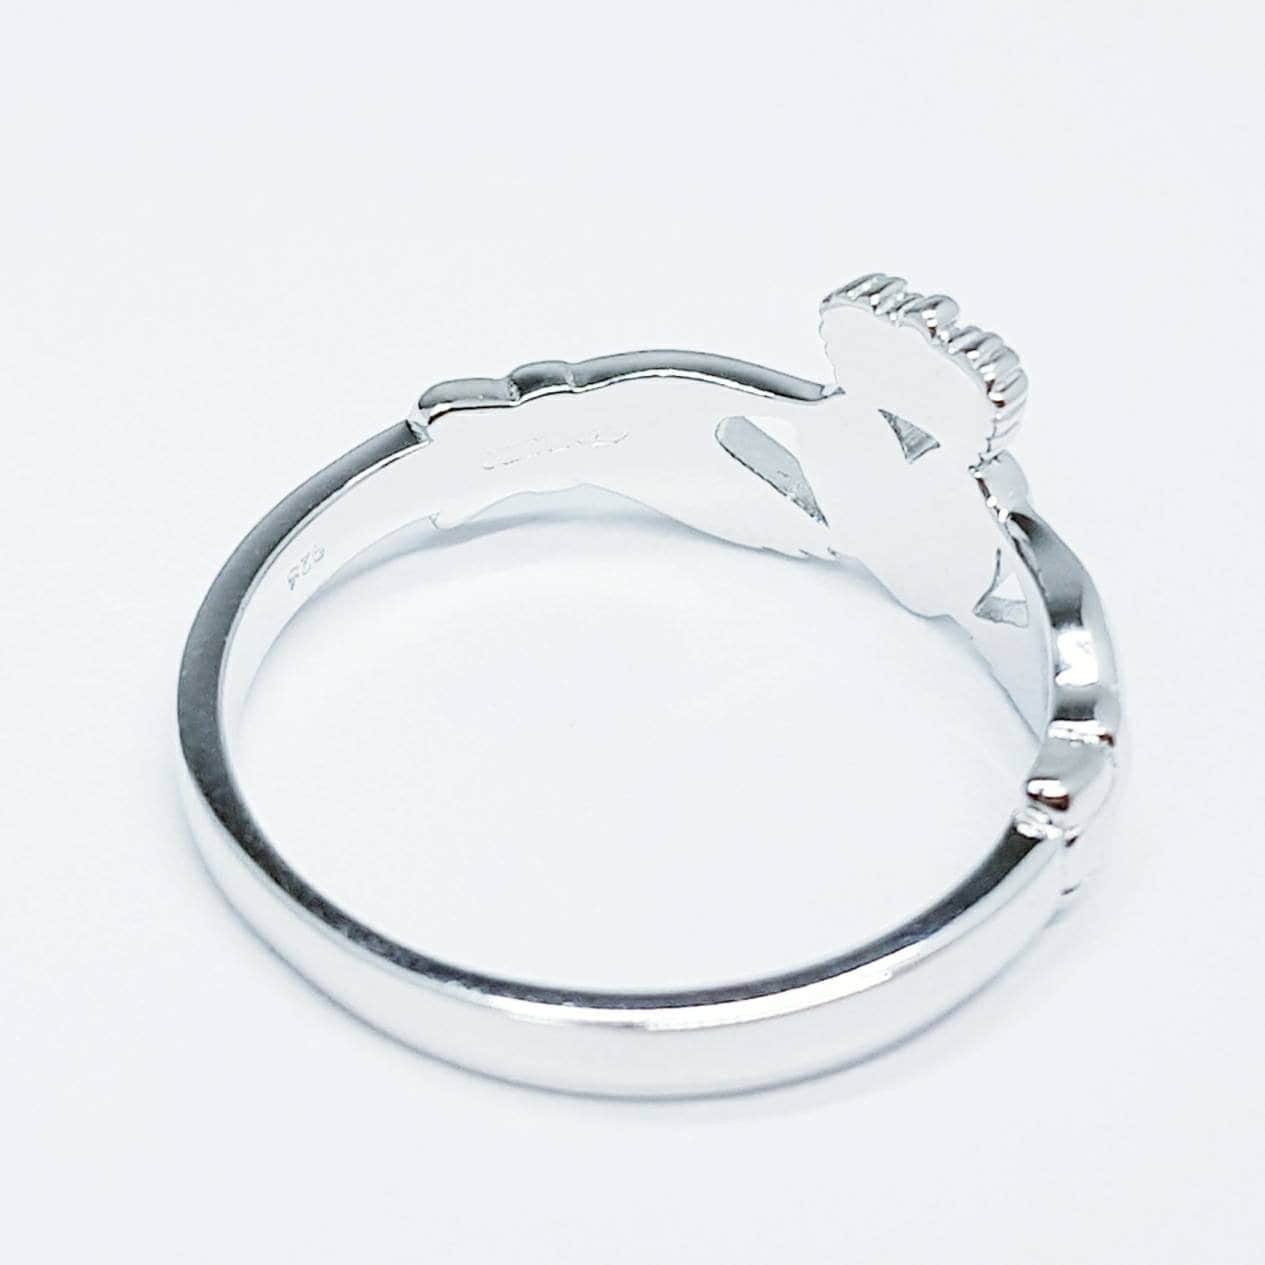 Small silver claddagh ring, Irish claddagh ring, delicate claddagh ring